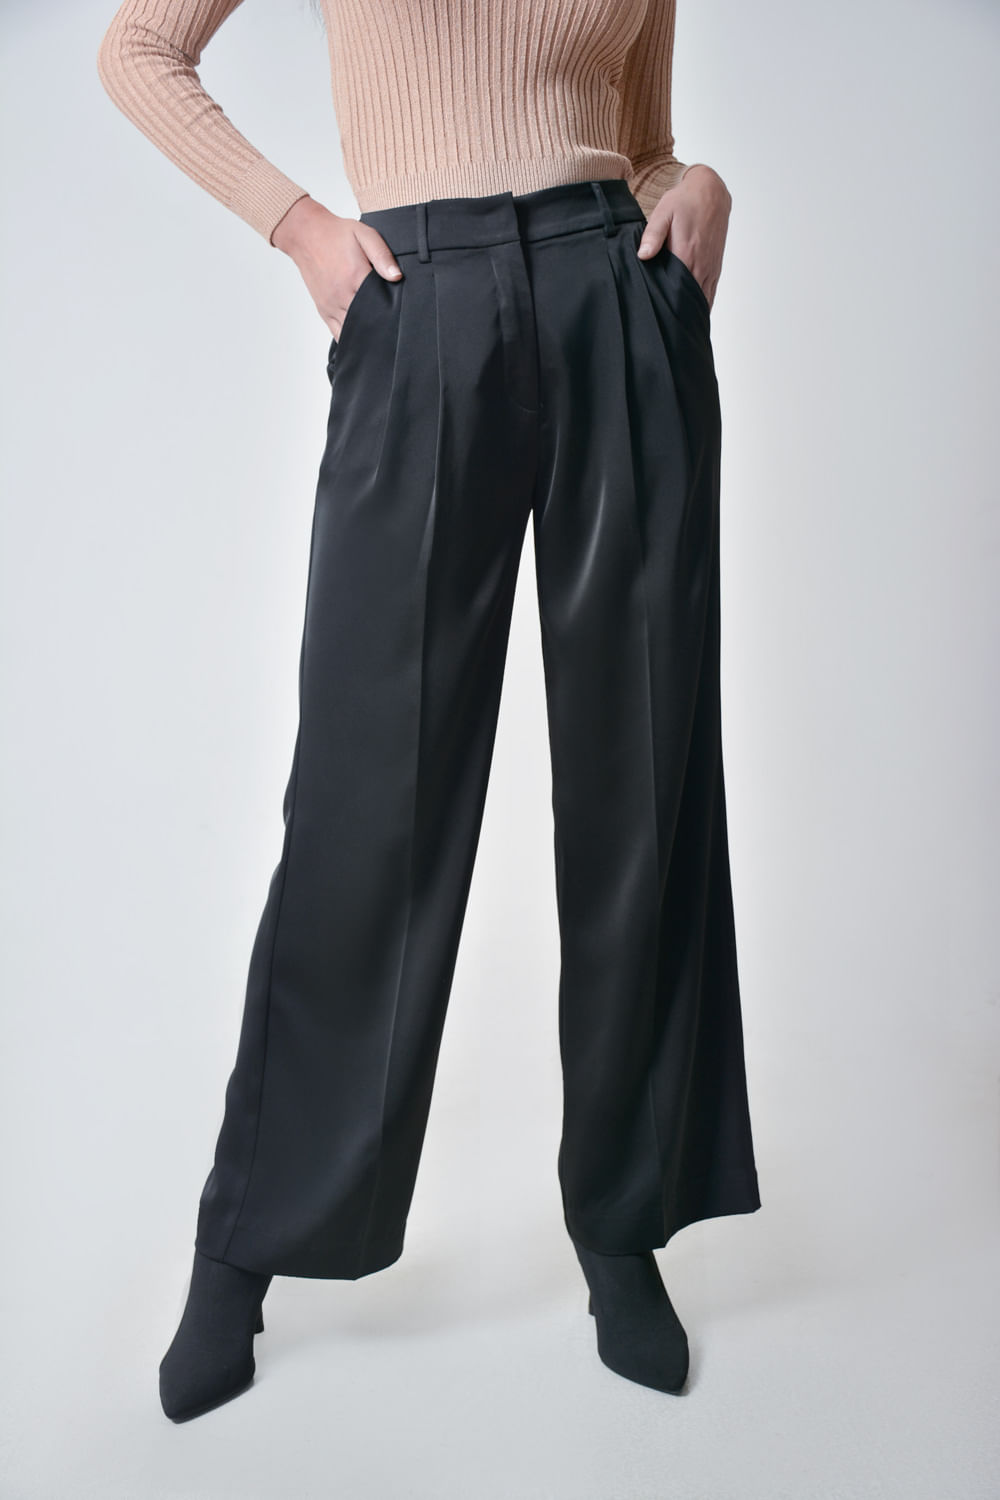 Pantalones para Mujer  Pantalones de Moda para mujer - Xuss